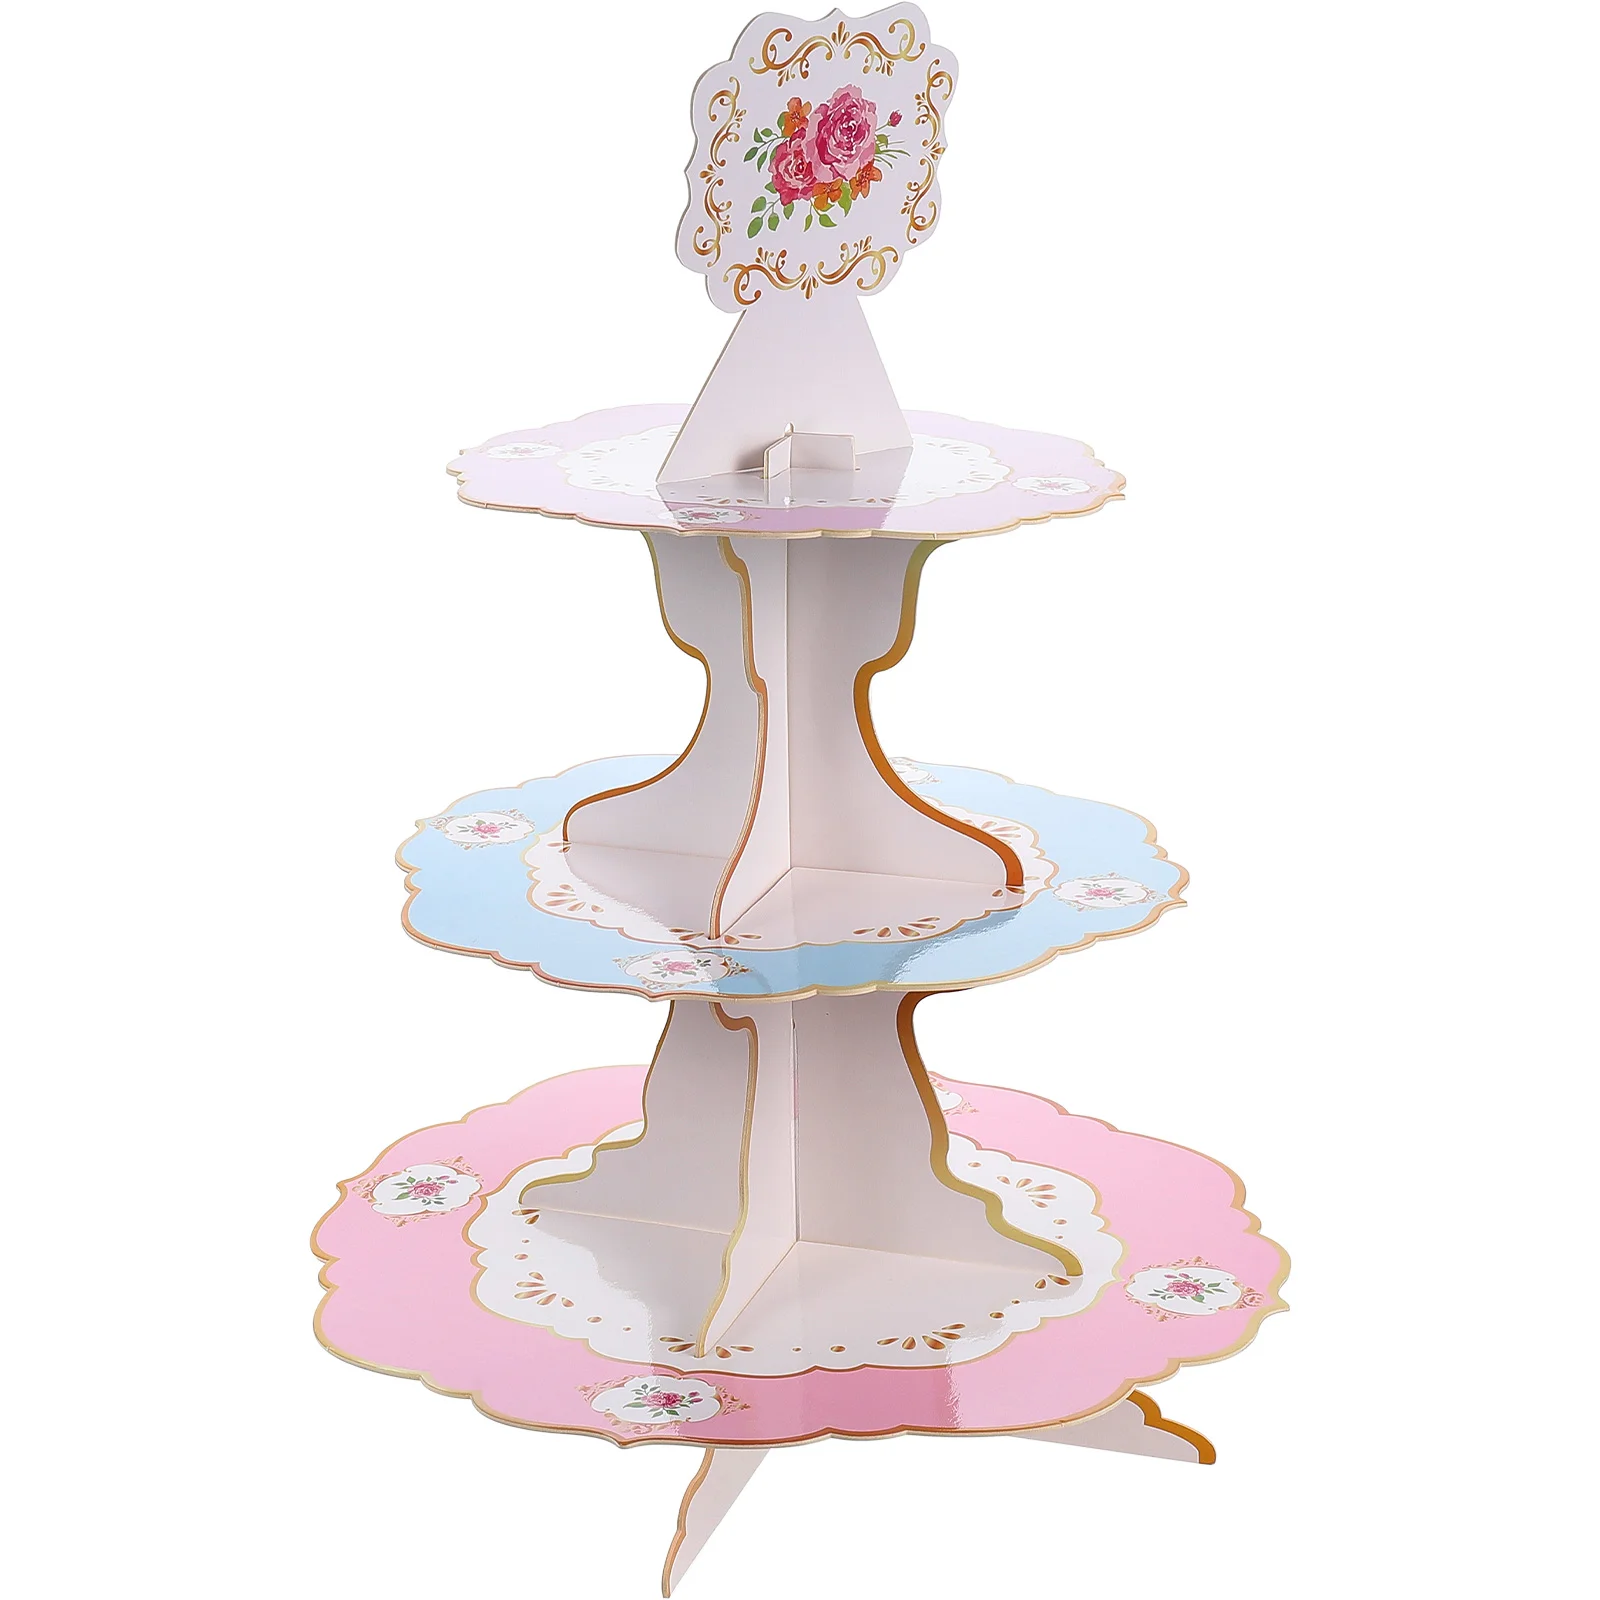 

Stand Cupcake Cake Tray Serving Cardboard Party 3 Tier Wedding Macaron Tower Three Tieredlayer Treeholderbuffet Flower Dessert